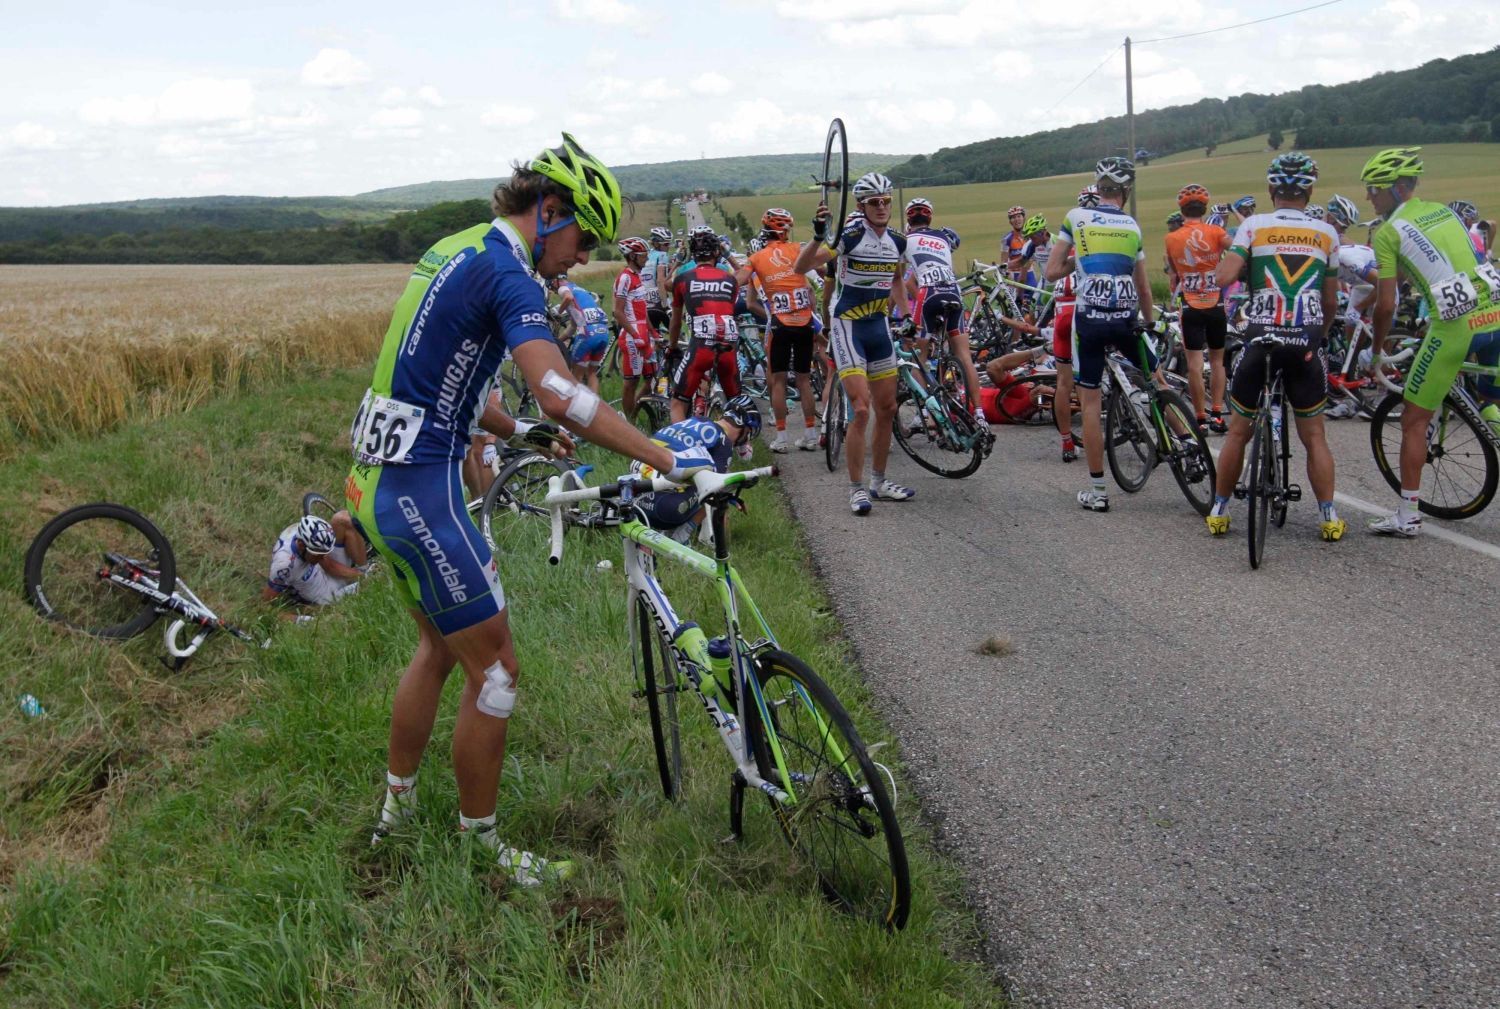 Hromadná nehoda během šesté etapy Tour de France 2012.